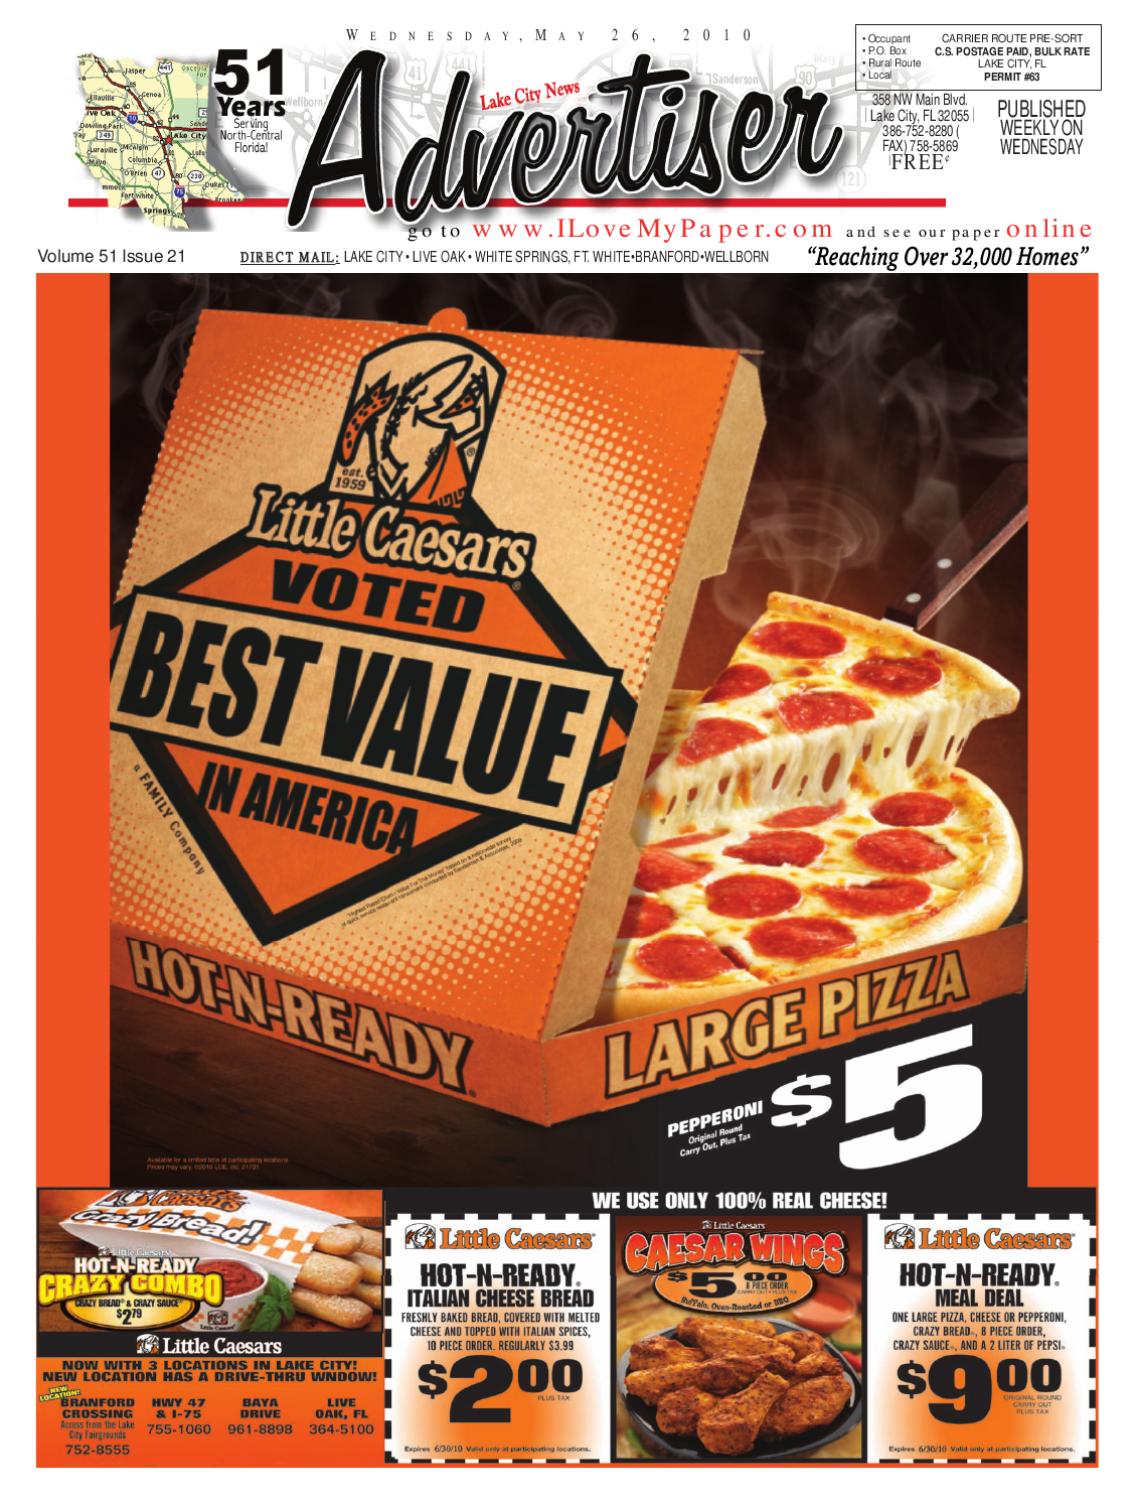 Fireplace Popcorn Popper Fresh Newspaper Lake City Advertiser Volume 51 issue 21 by Scbusa